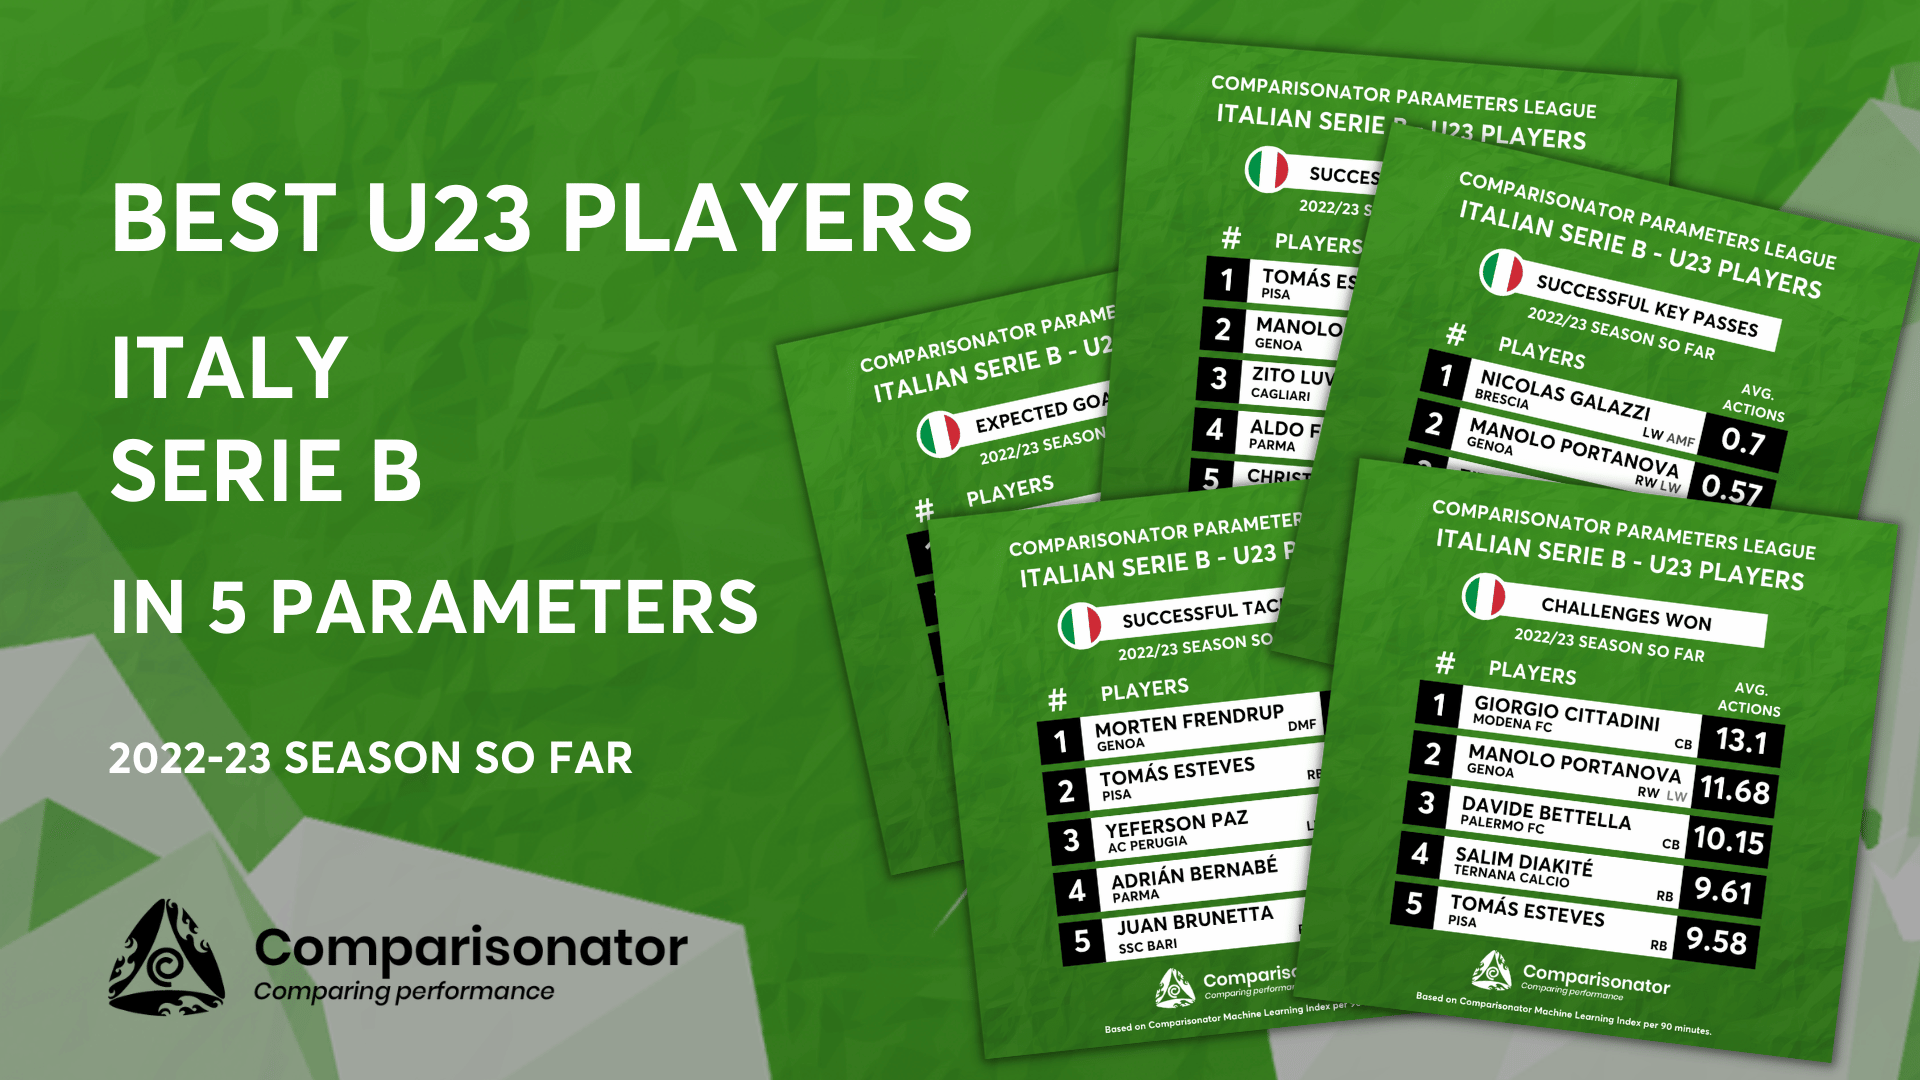 Comparisonator - Bests of Italian Serie B in 5 Parameters - 2021/22 Season